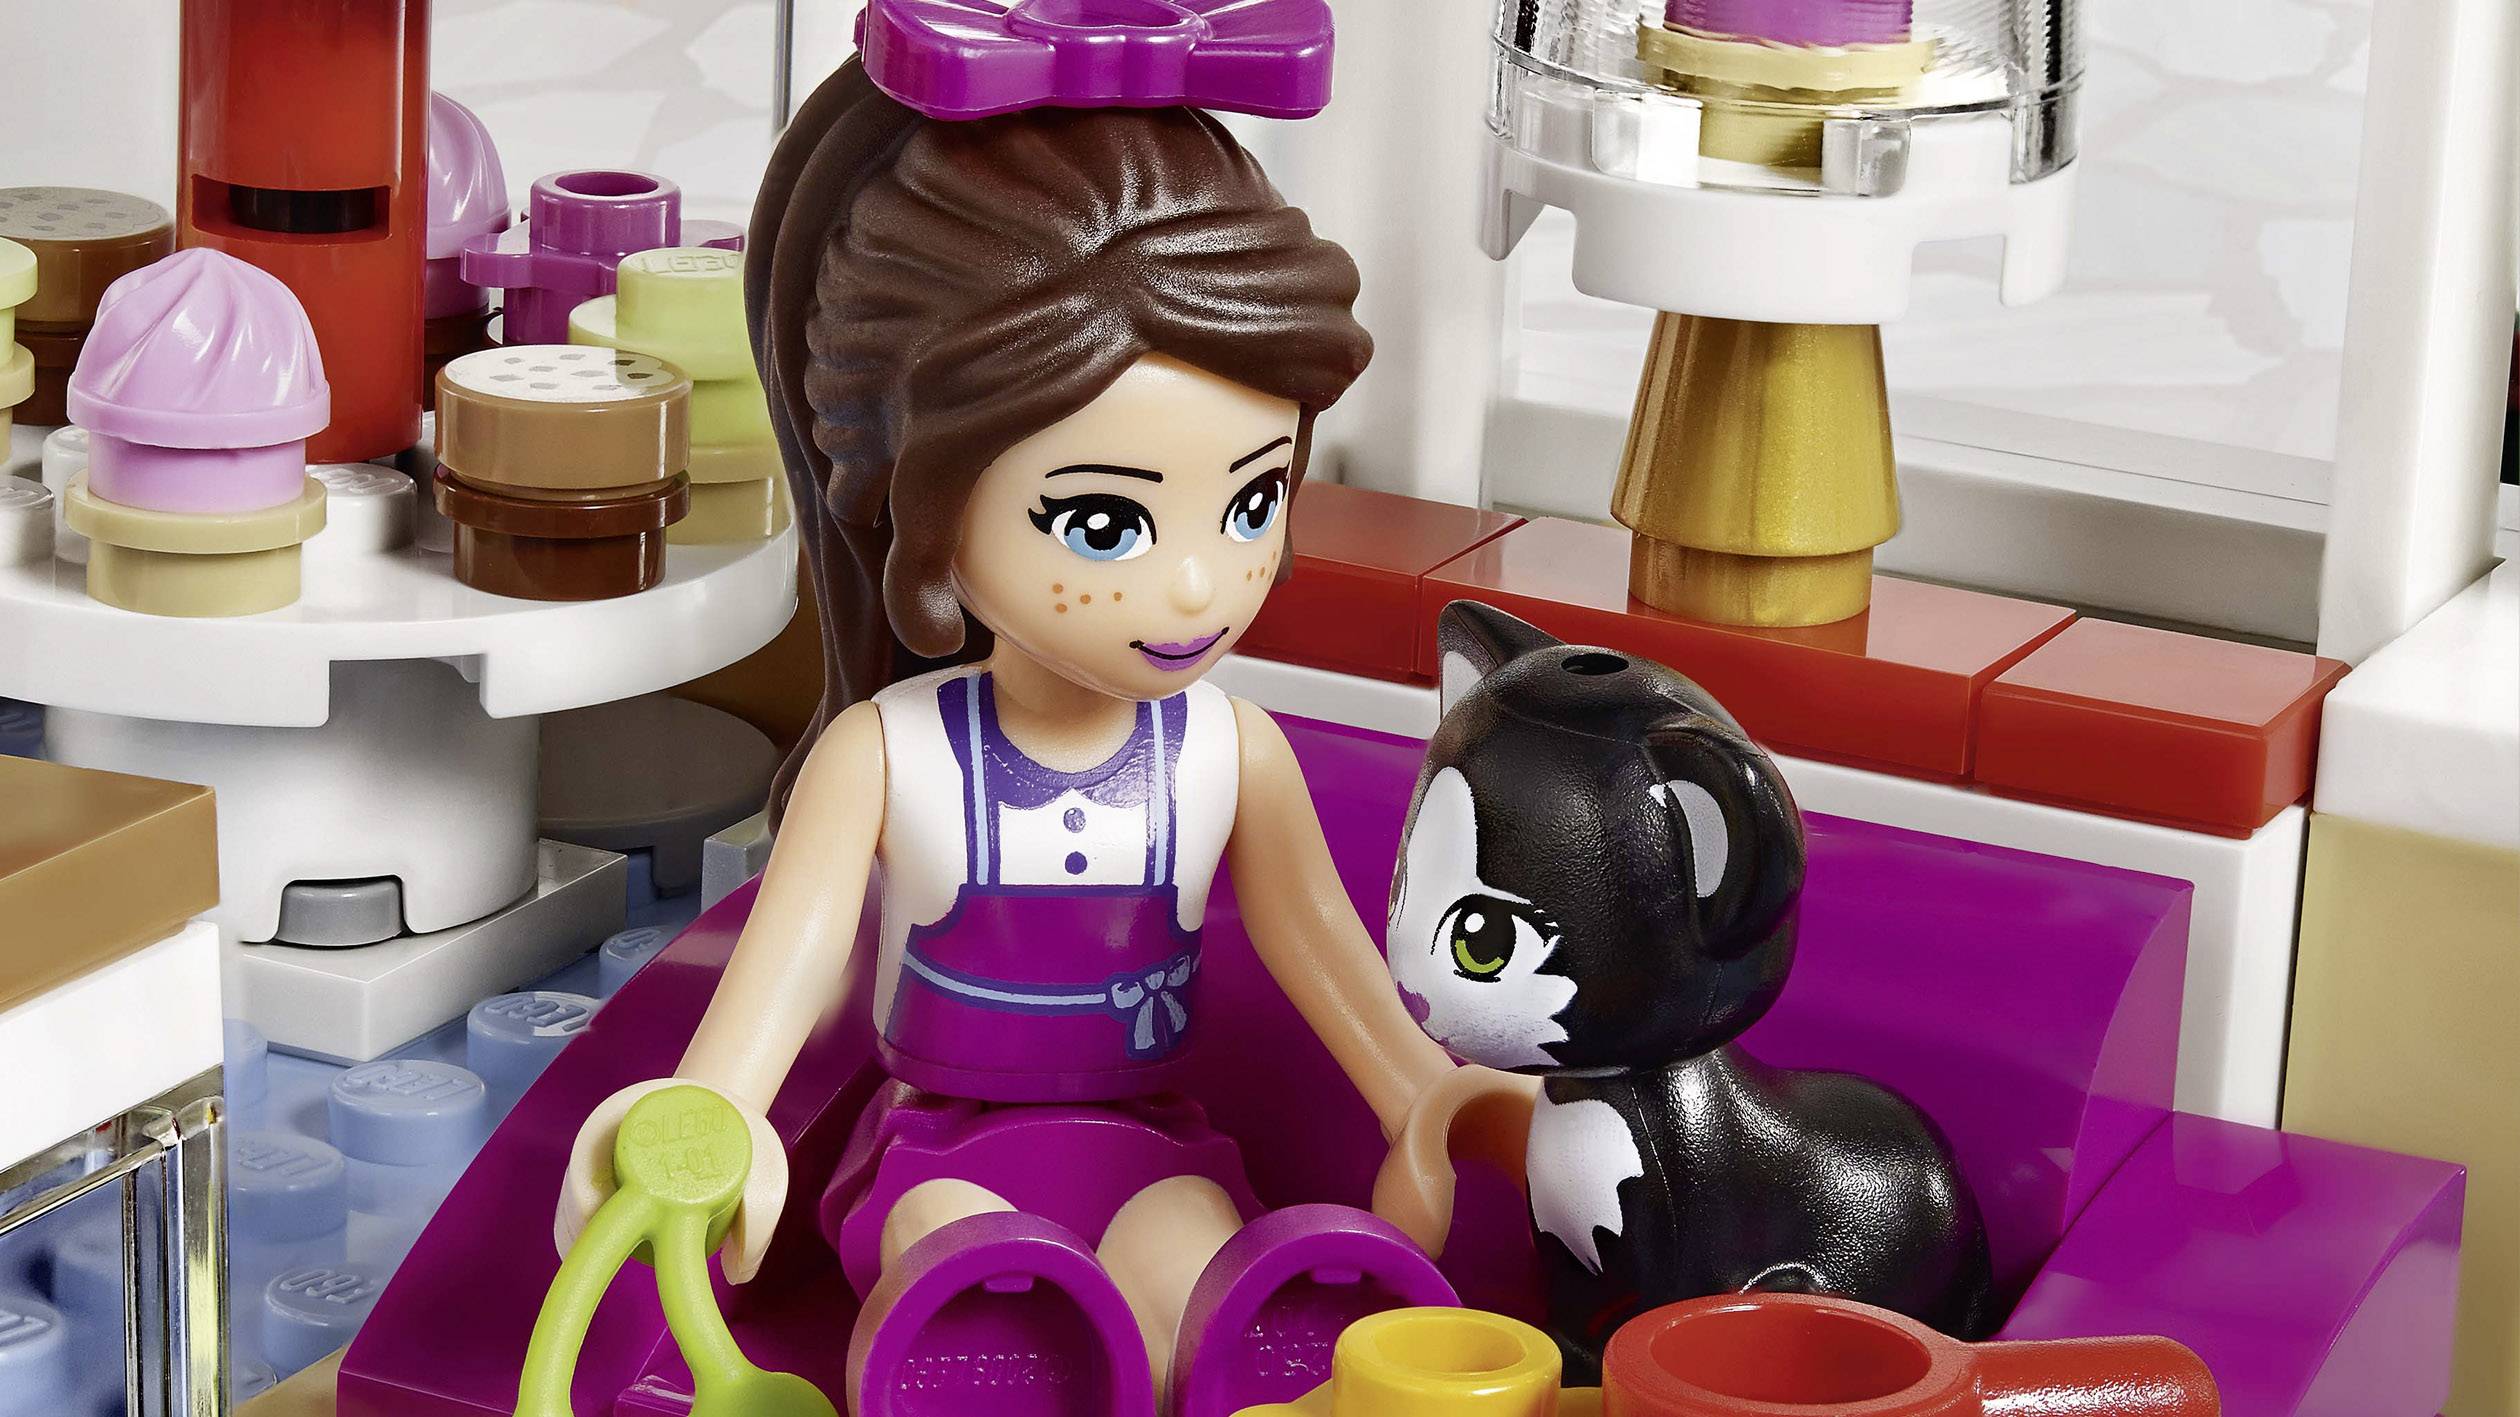 LEGO® Friends 41119 Heartlake Cupcake-Café NEU OVP NEW MISB NRFB 